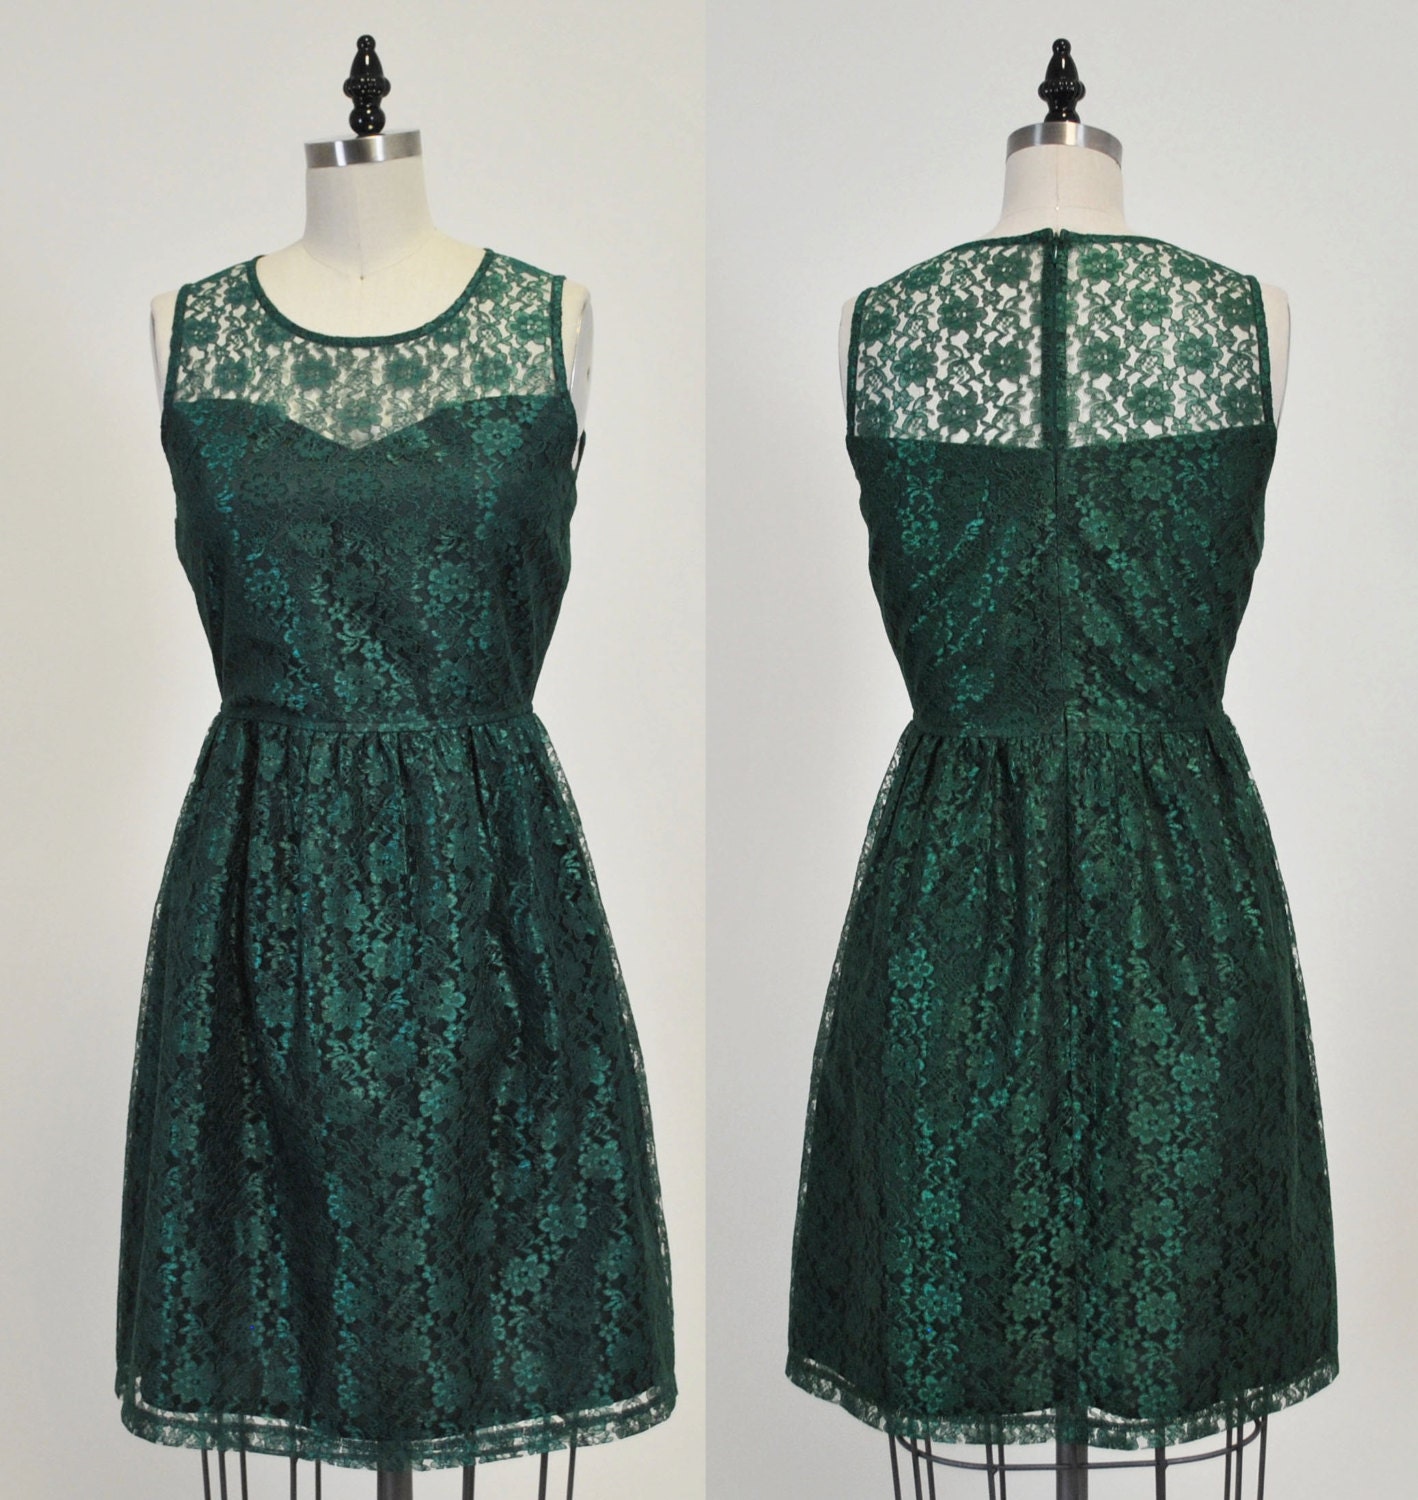 PROVENCE Emerald : Emerald green lace dress sweetheart